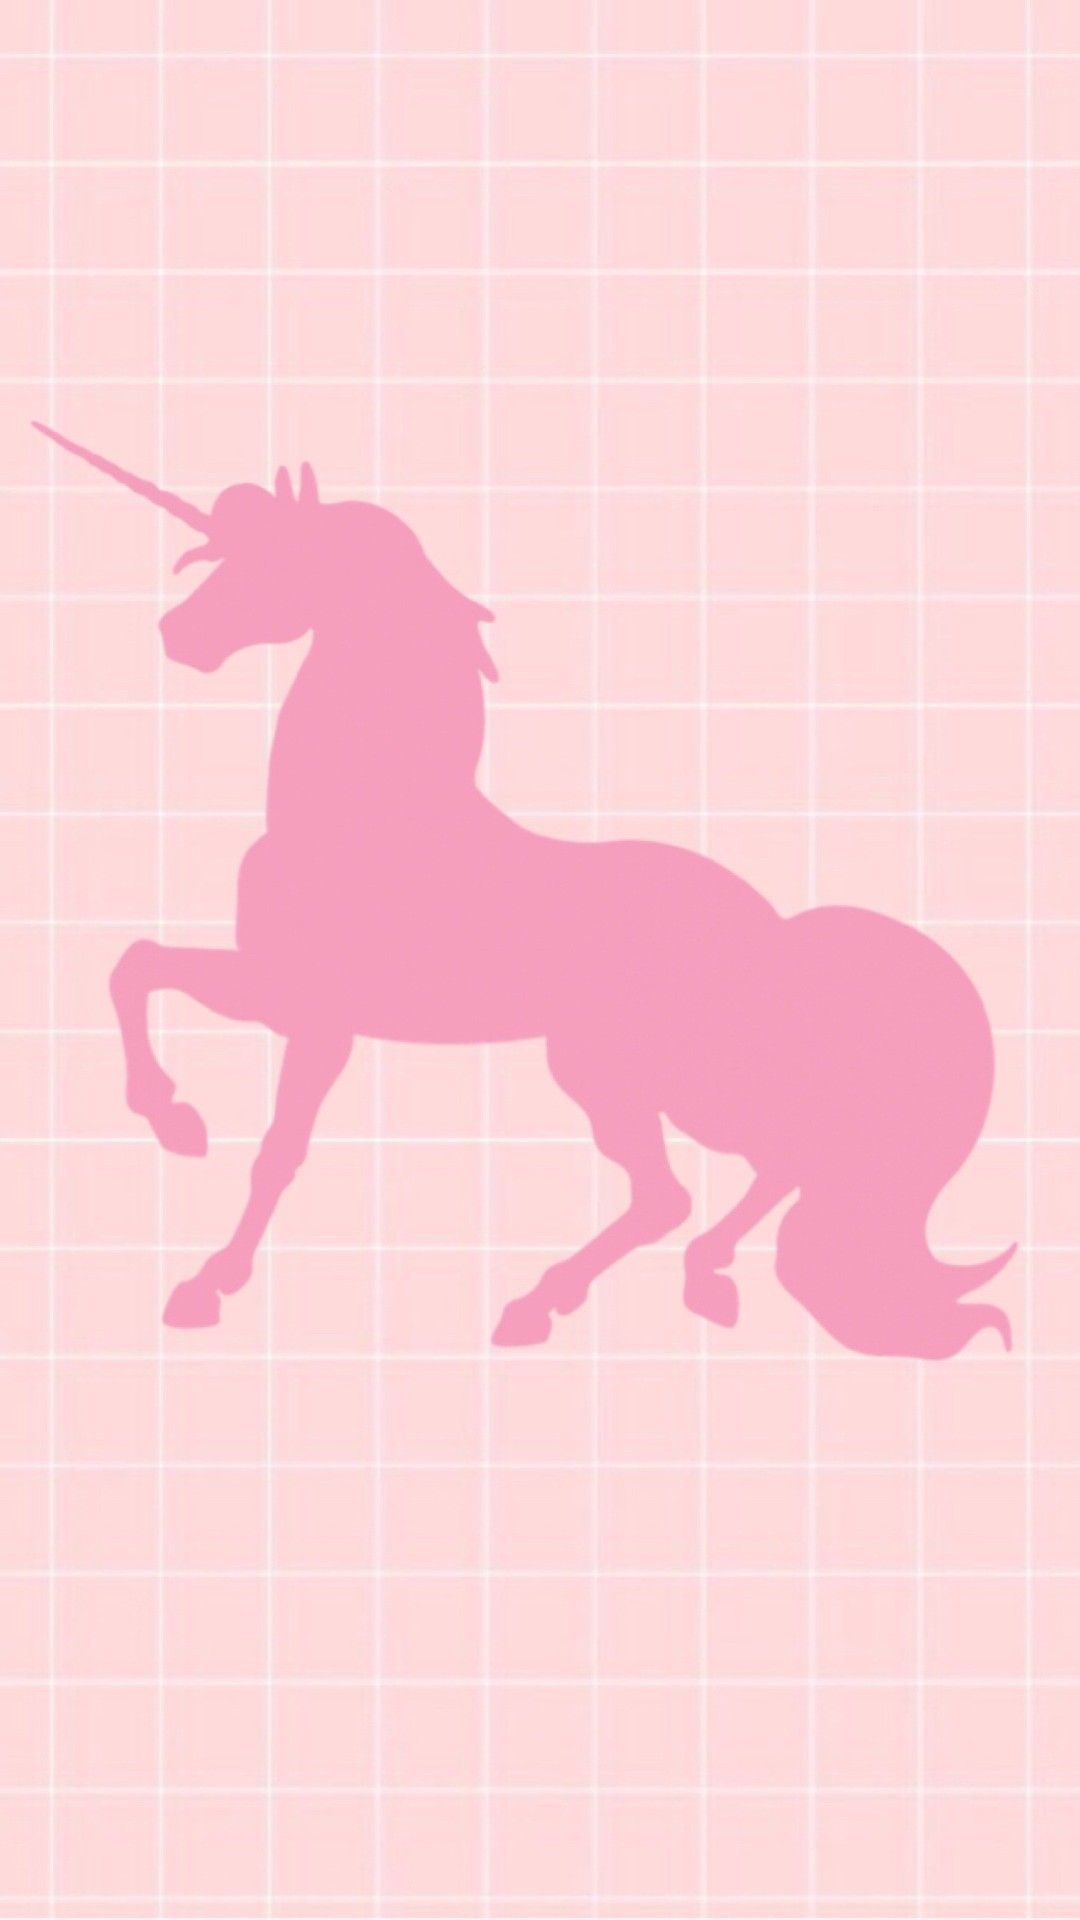 Cute Girly Unicorn iPhone Wallpaper in .cuteiphonewallpaper.com